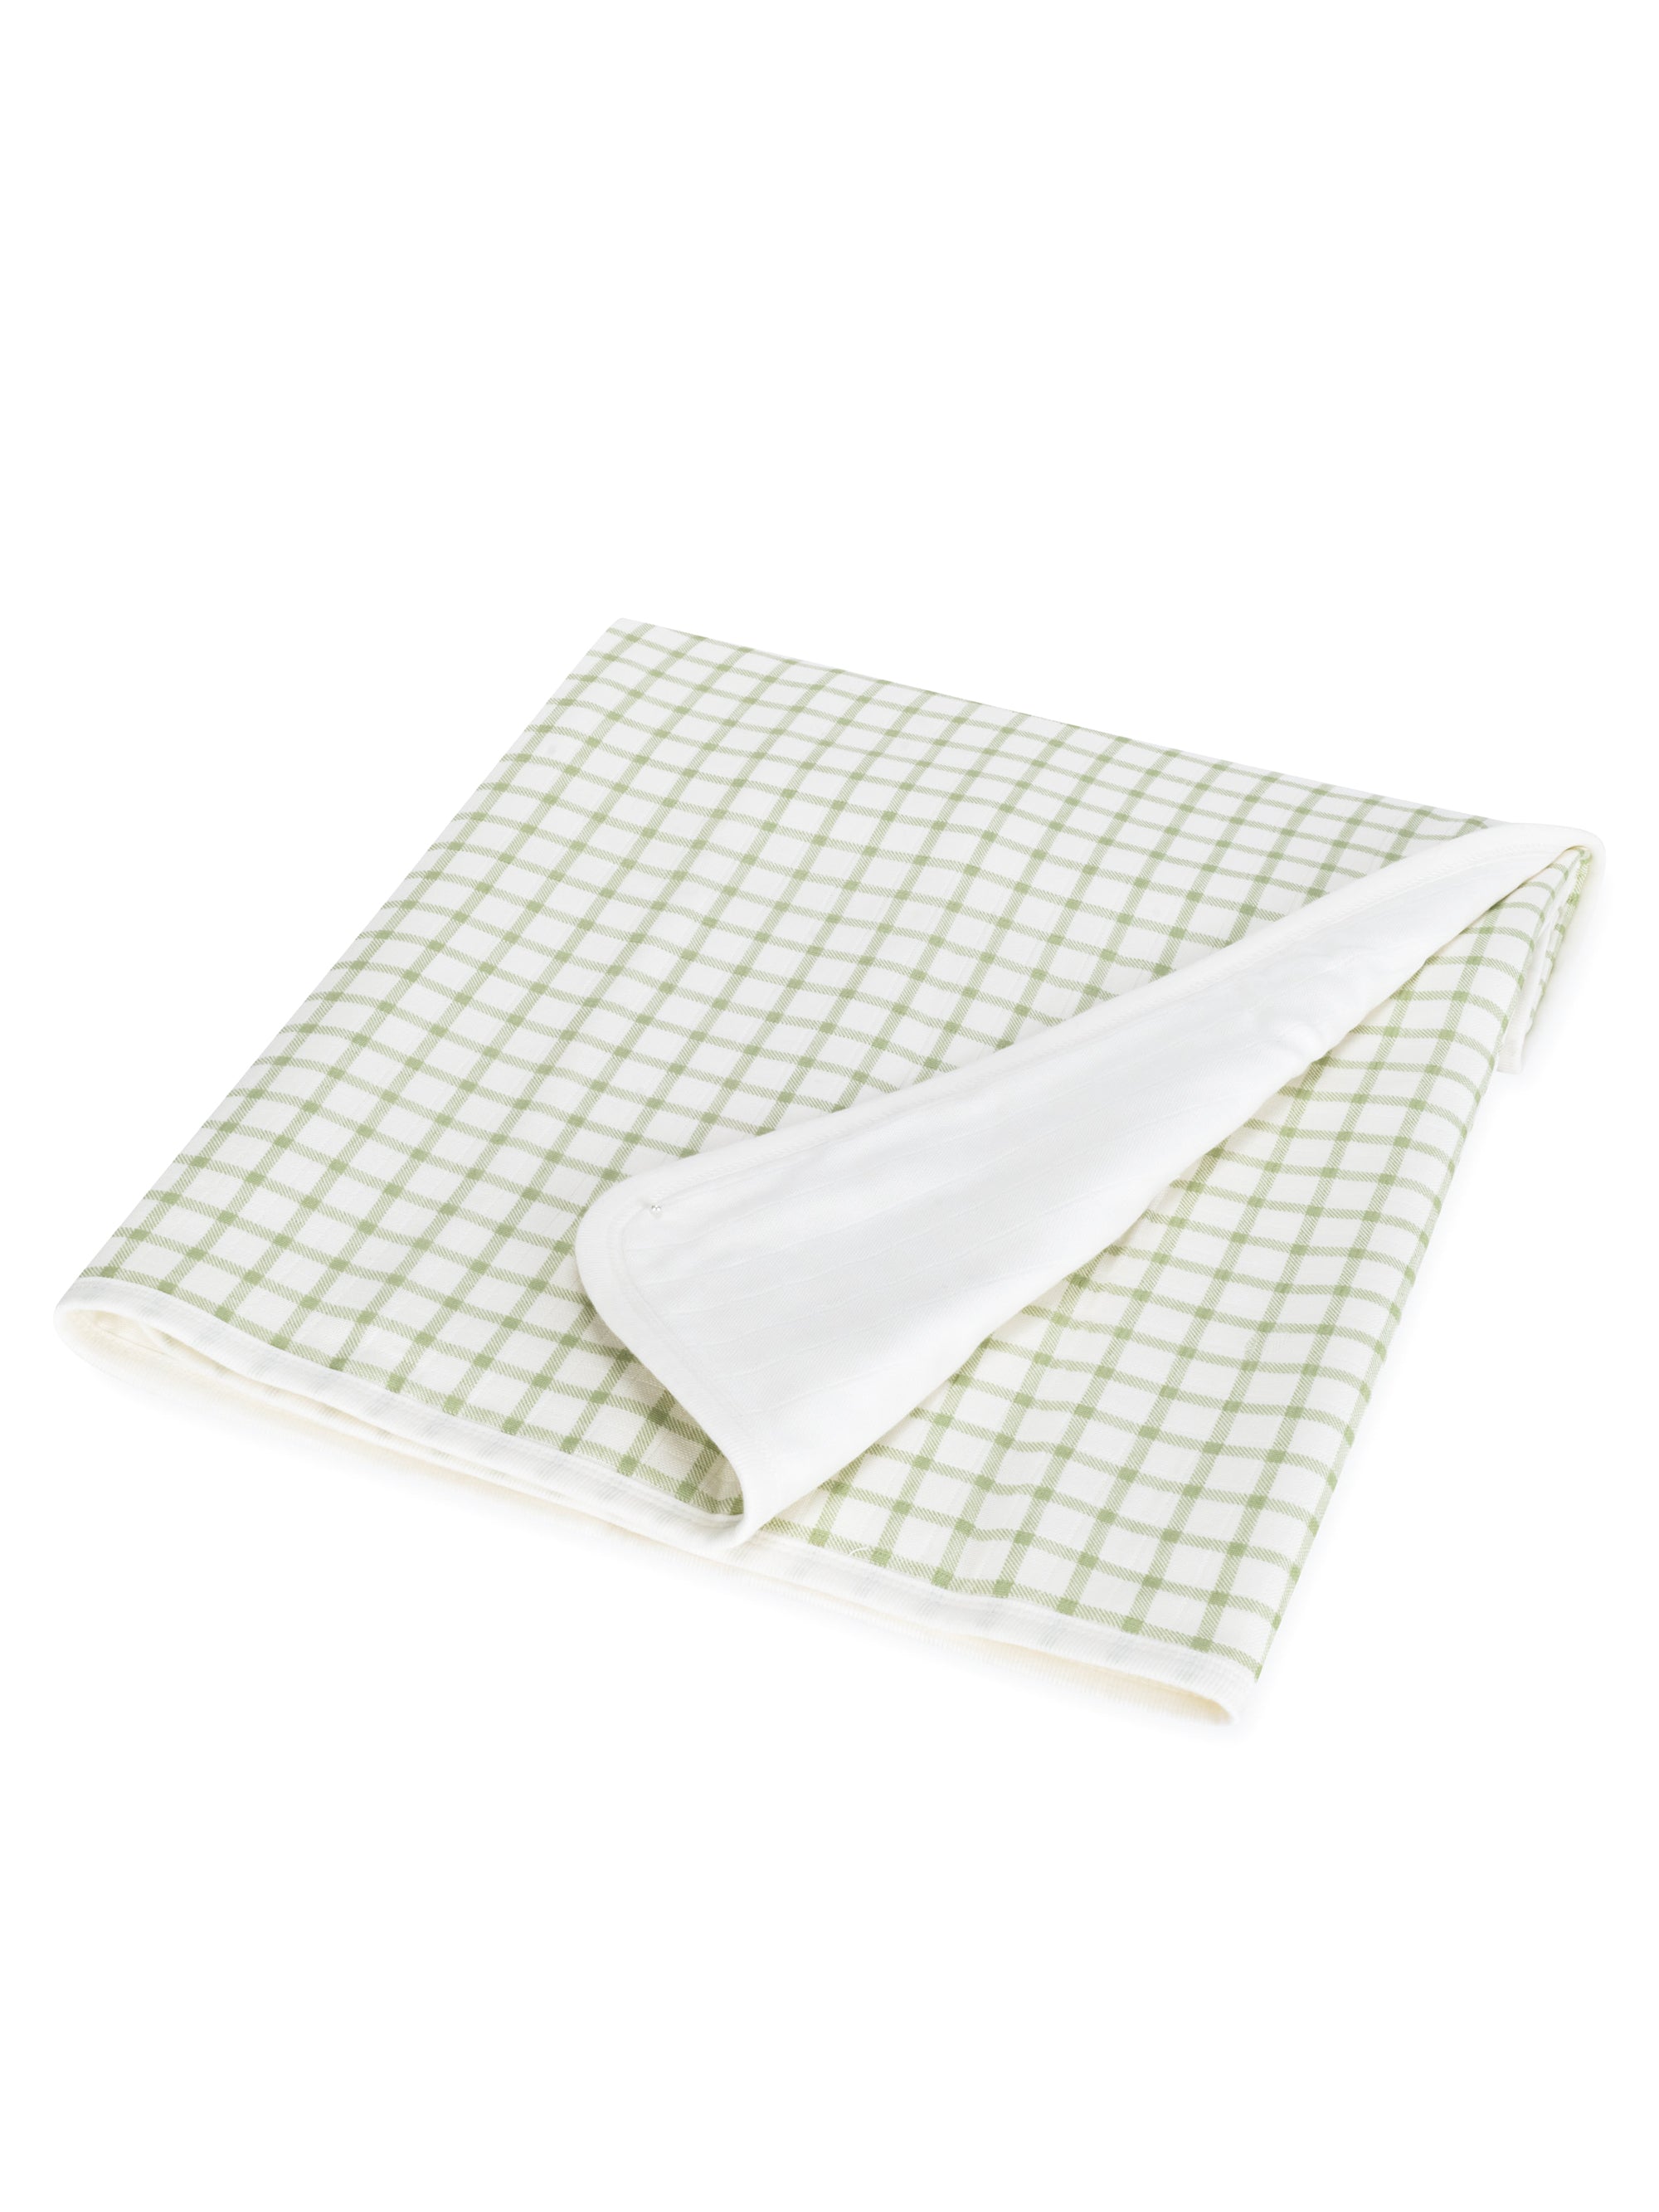 Muslin Blanket - Sage Windowpane / White